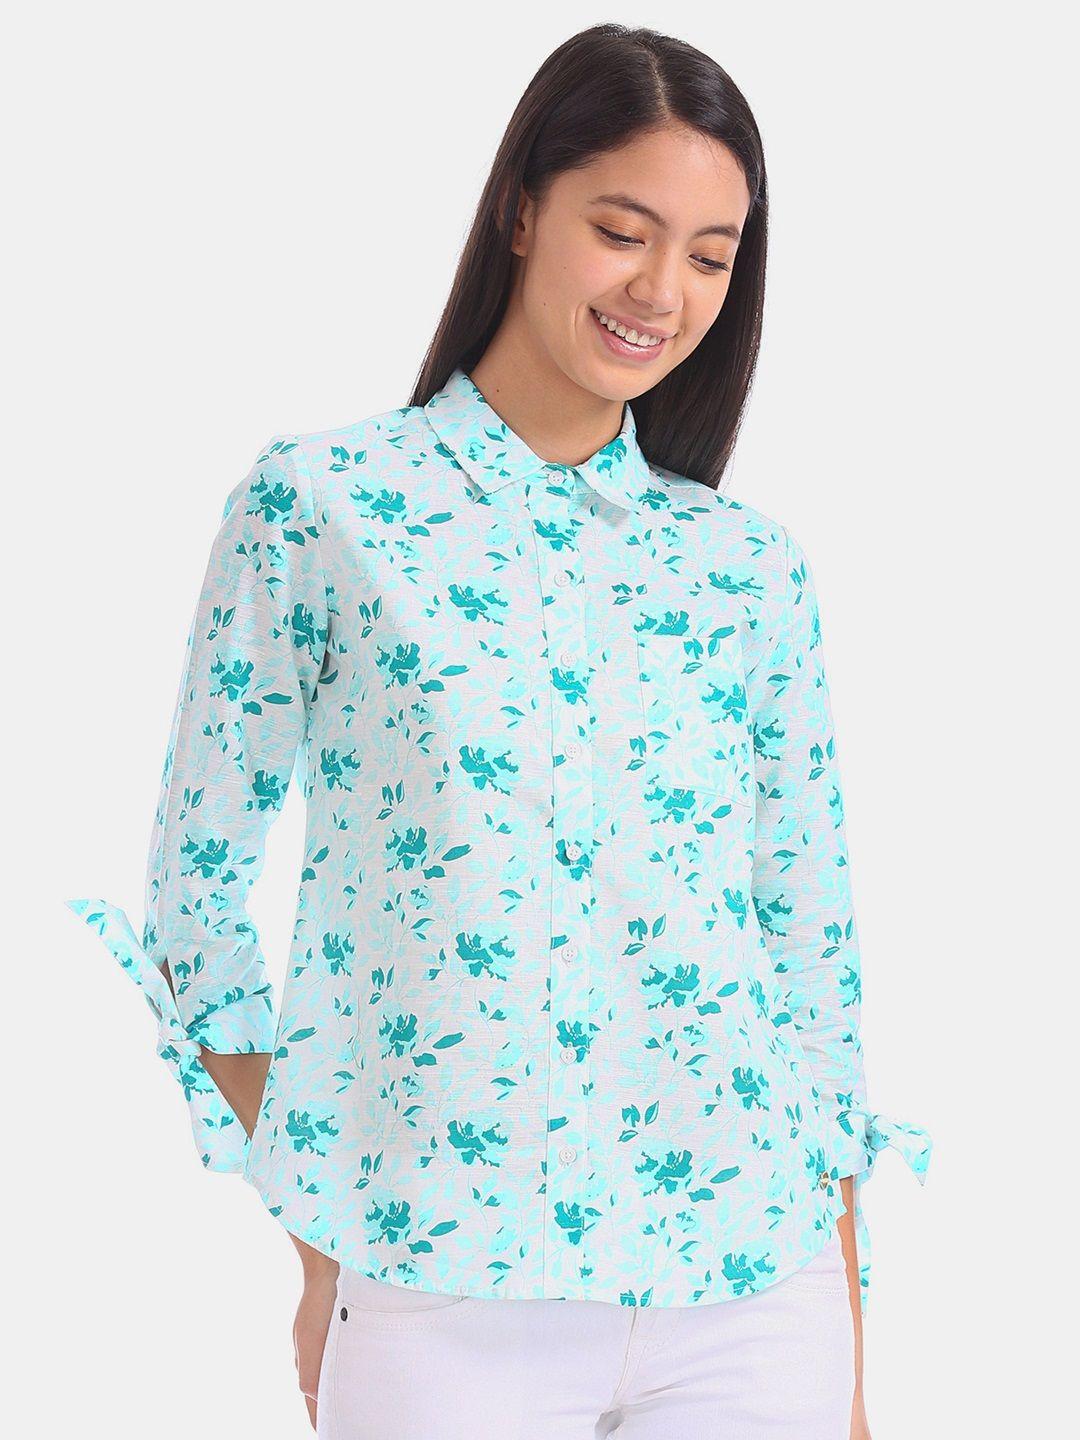 u.s. polo assn. women turquoise blue regular fit printed casual shirt